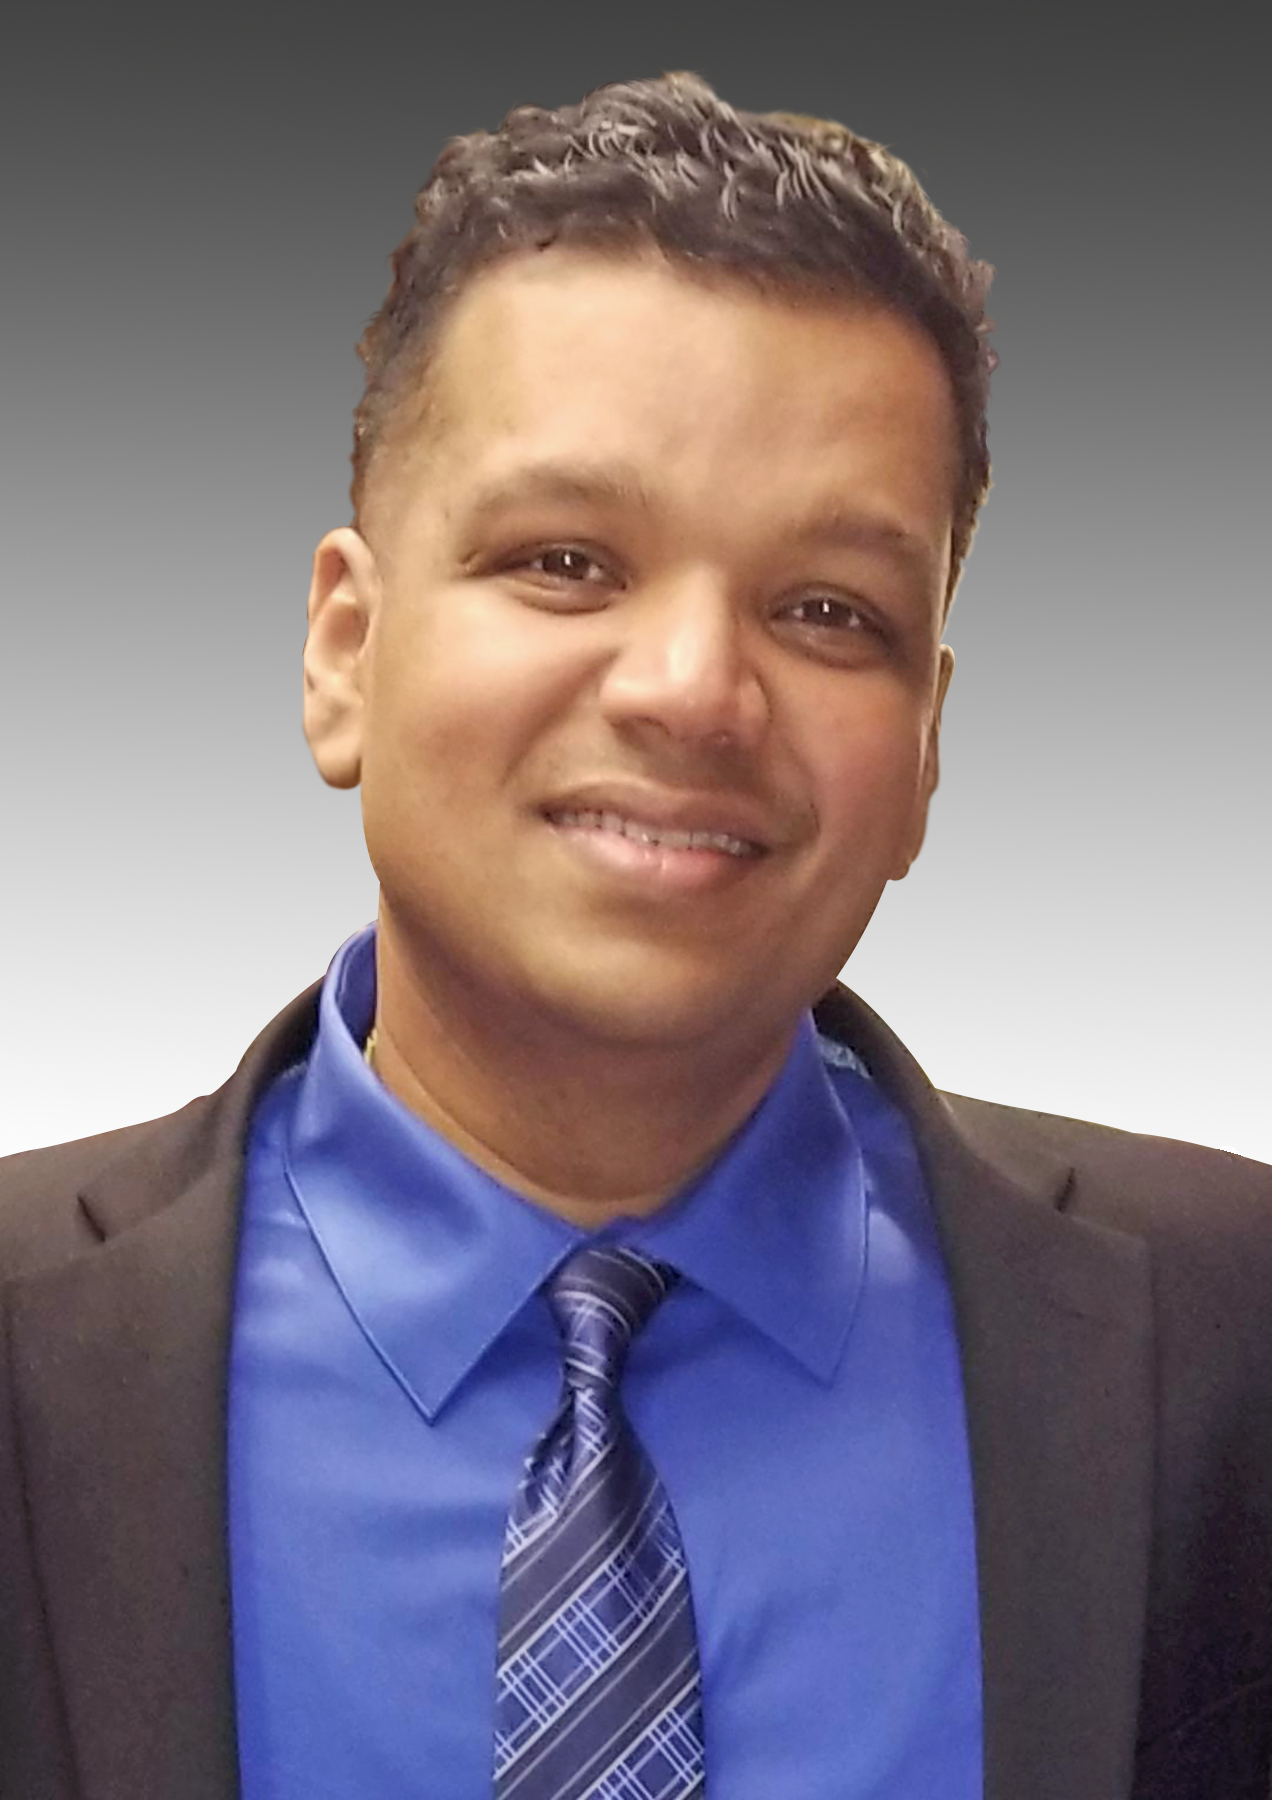 Yadram Chandarballi, Northeast Service Technician for Natoli Engineering Company, Inc.